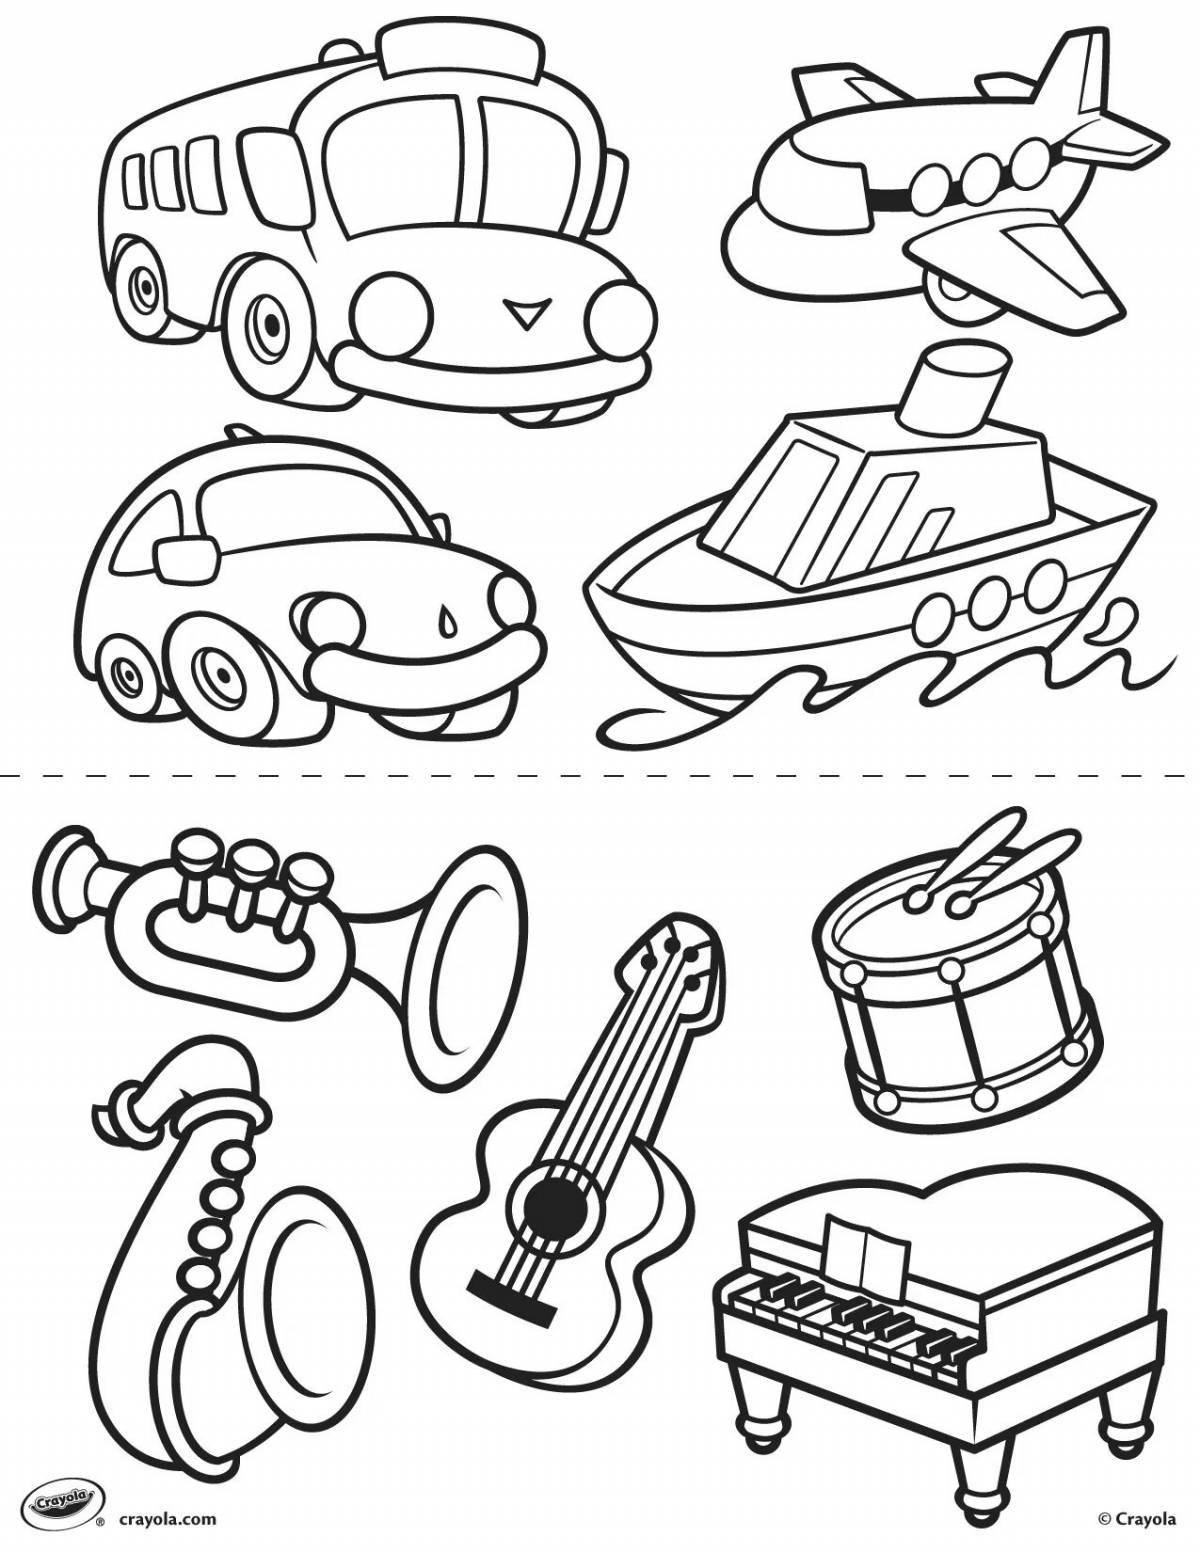 Playful transport coloring book for kids